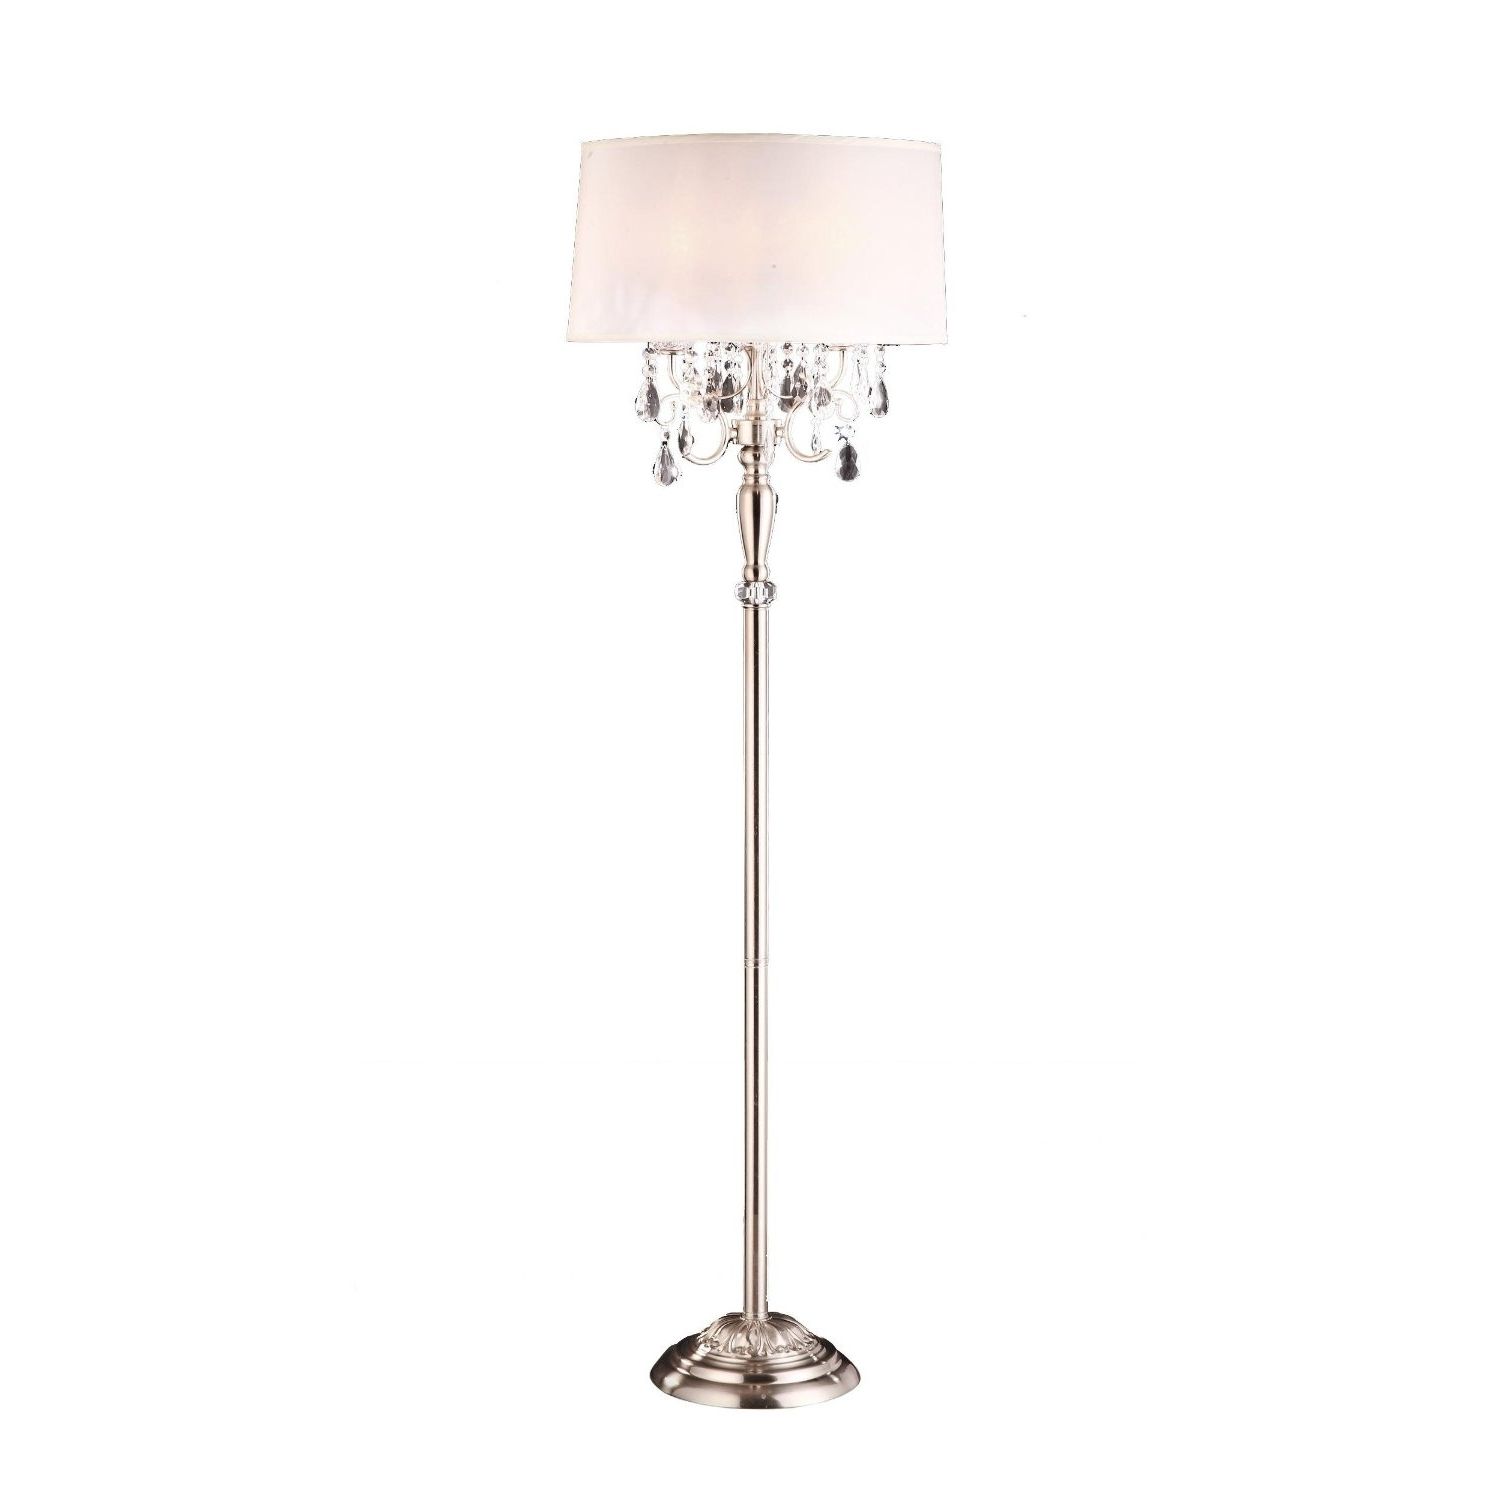 Chandelier Standing Lamps In Most Recent Home Design : Excellent Floor Lamp Crystal Chandelier Chrome Beaded (View 14 of 15)